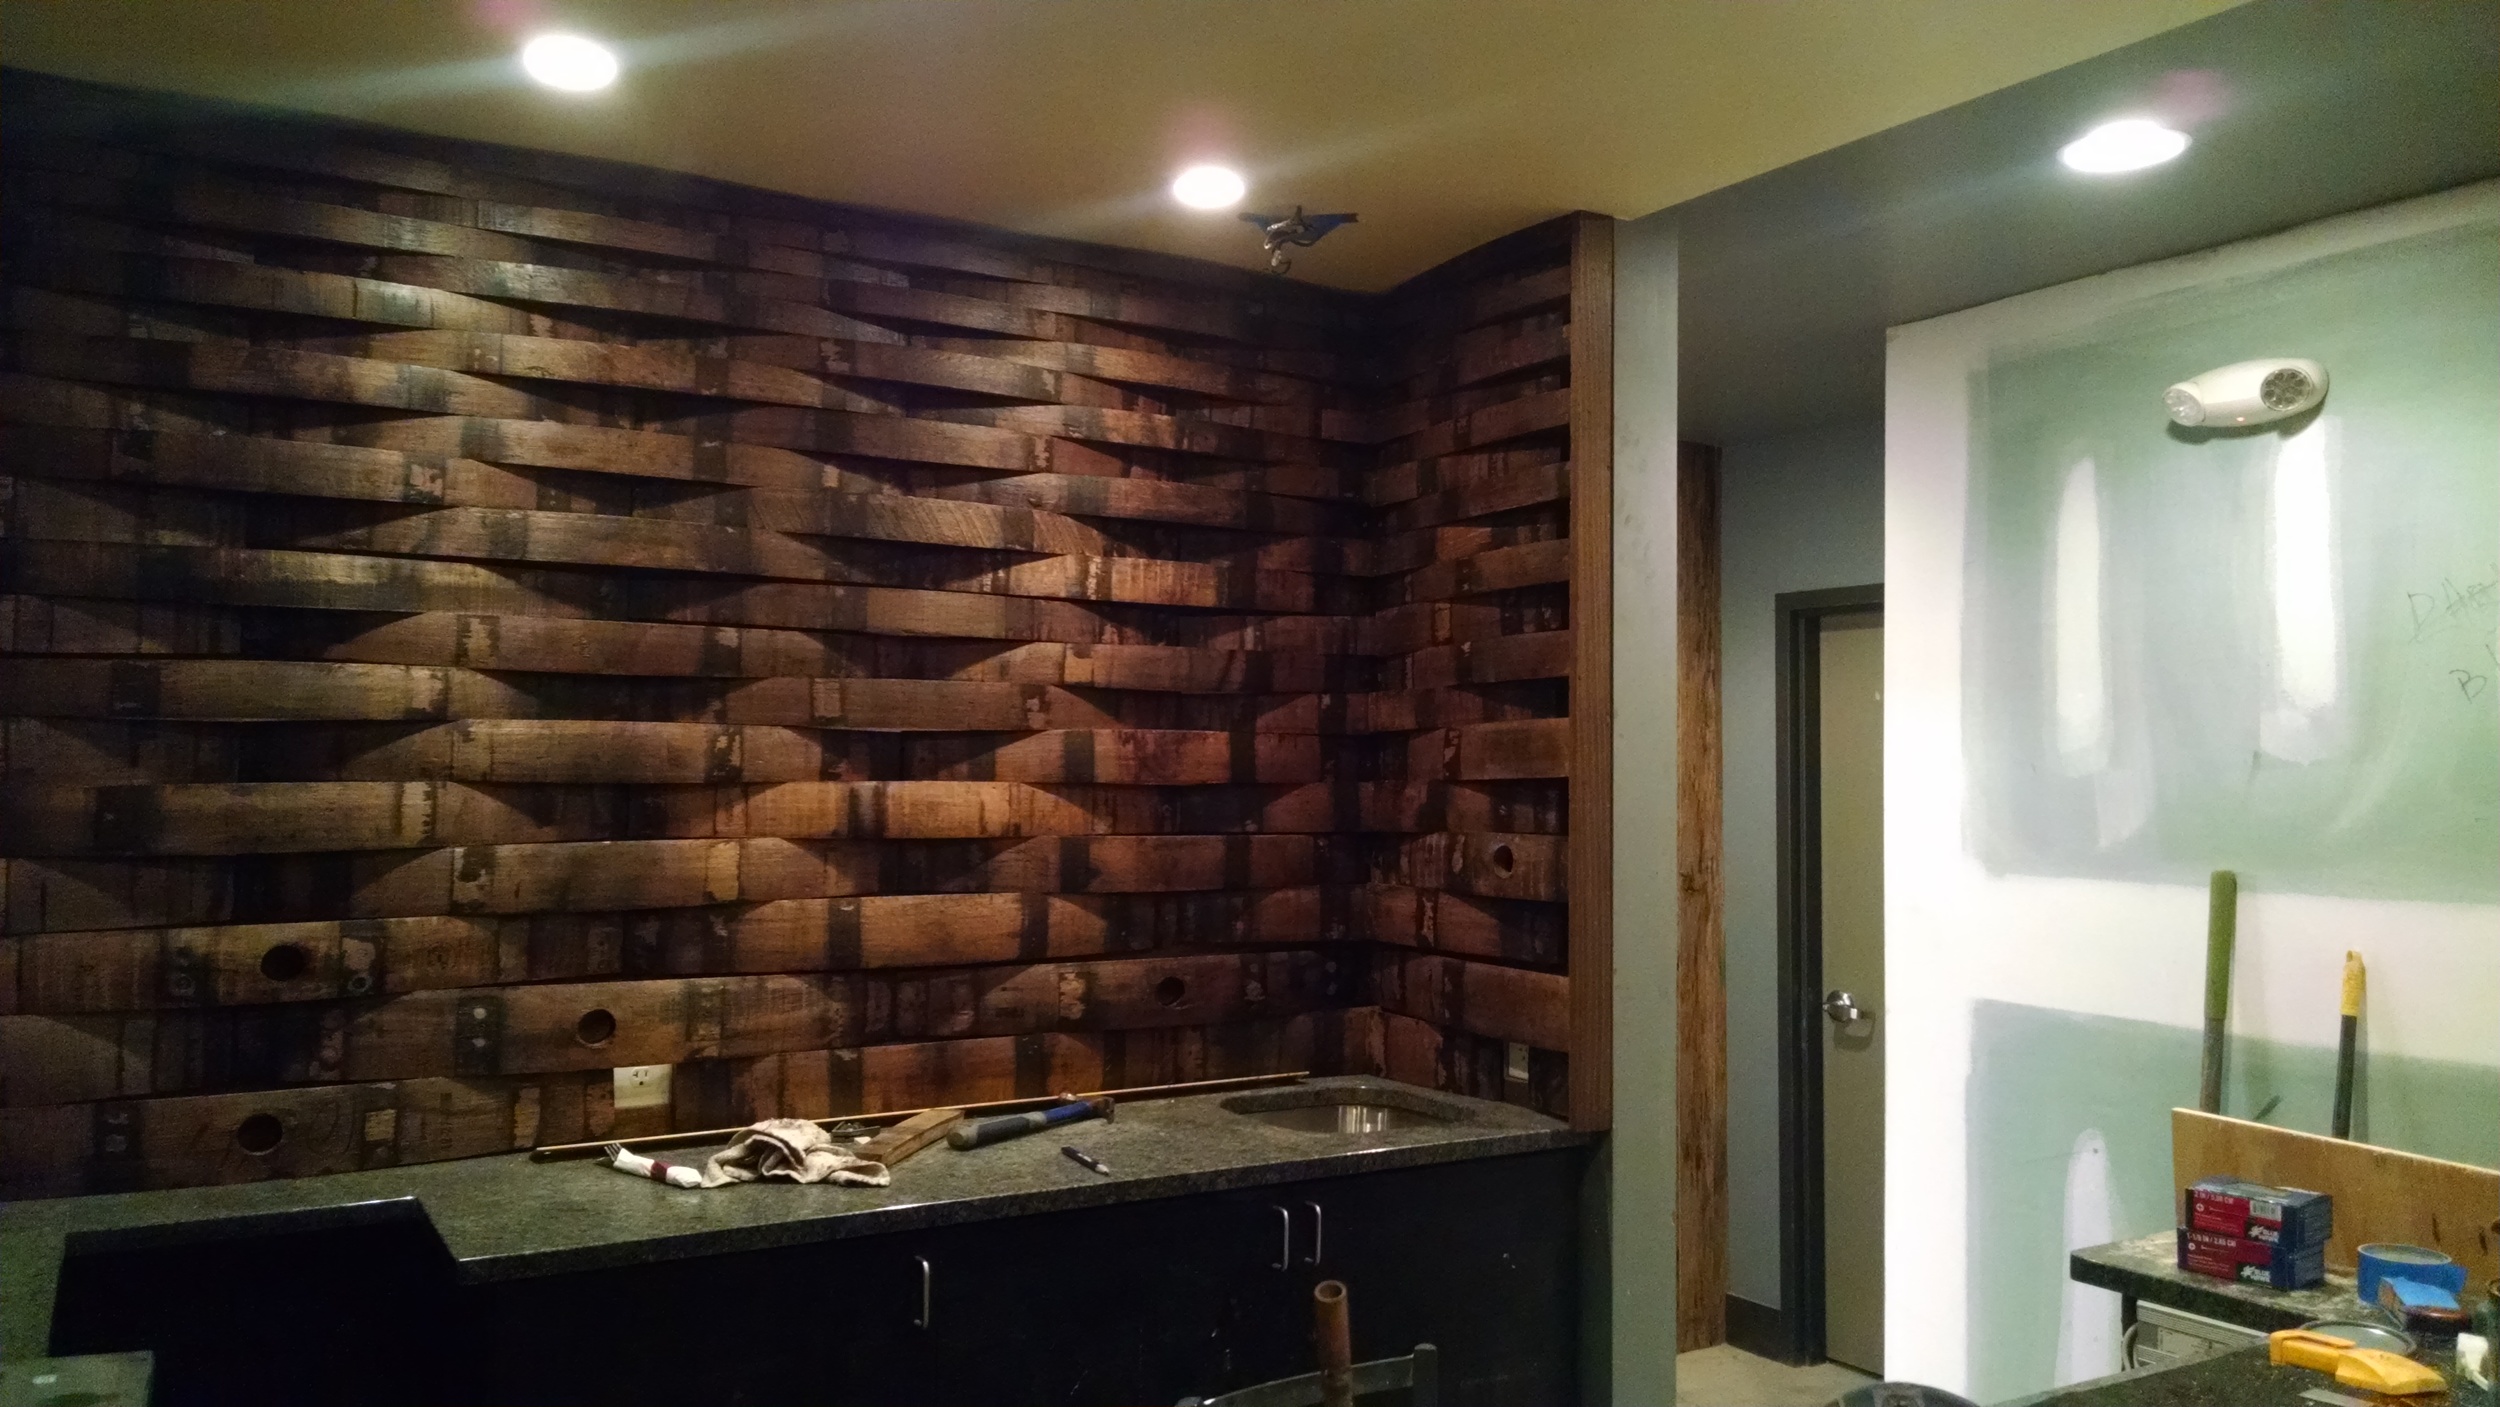 Whiskey Bourbon Barrel Stave Bar Back Shelf